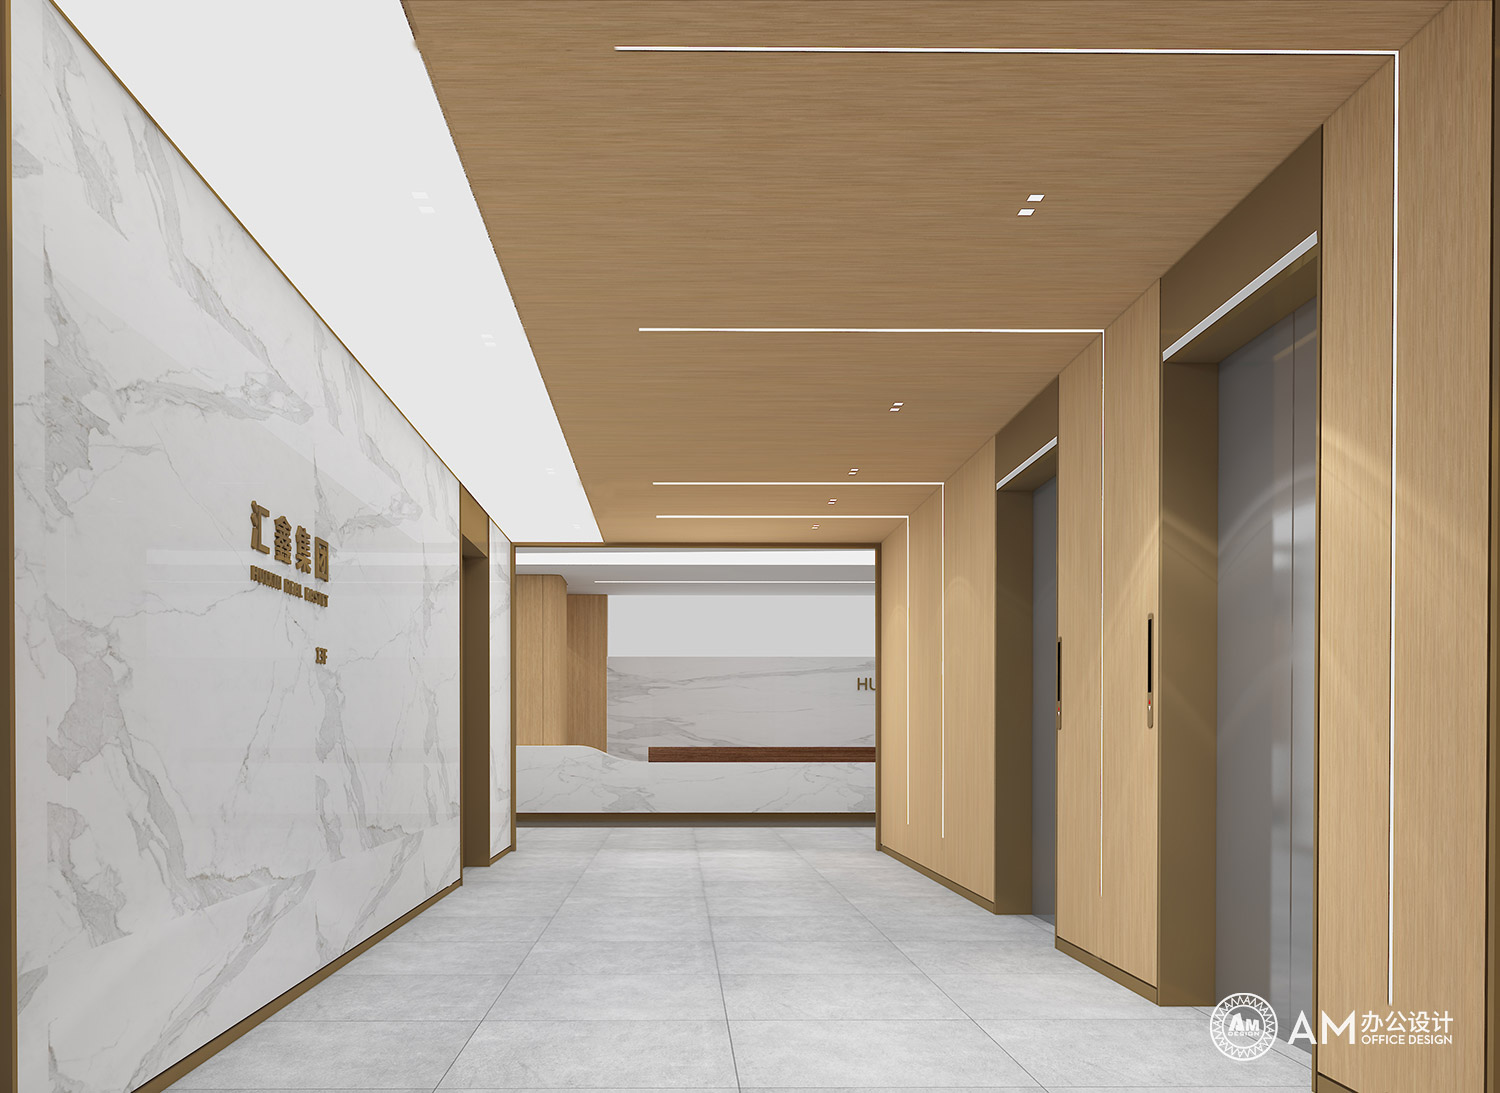 AM设计 | 汇鑫地产公司办公楼电梯间设计